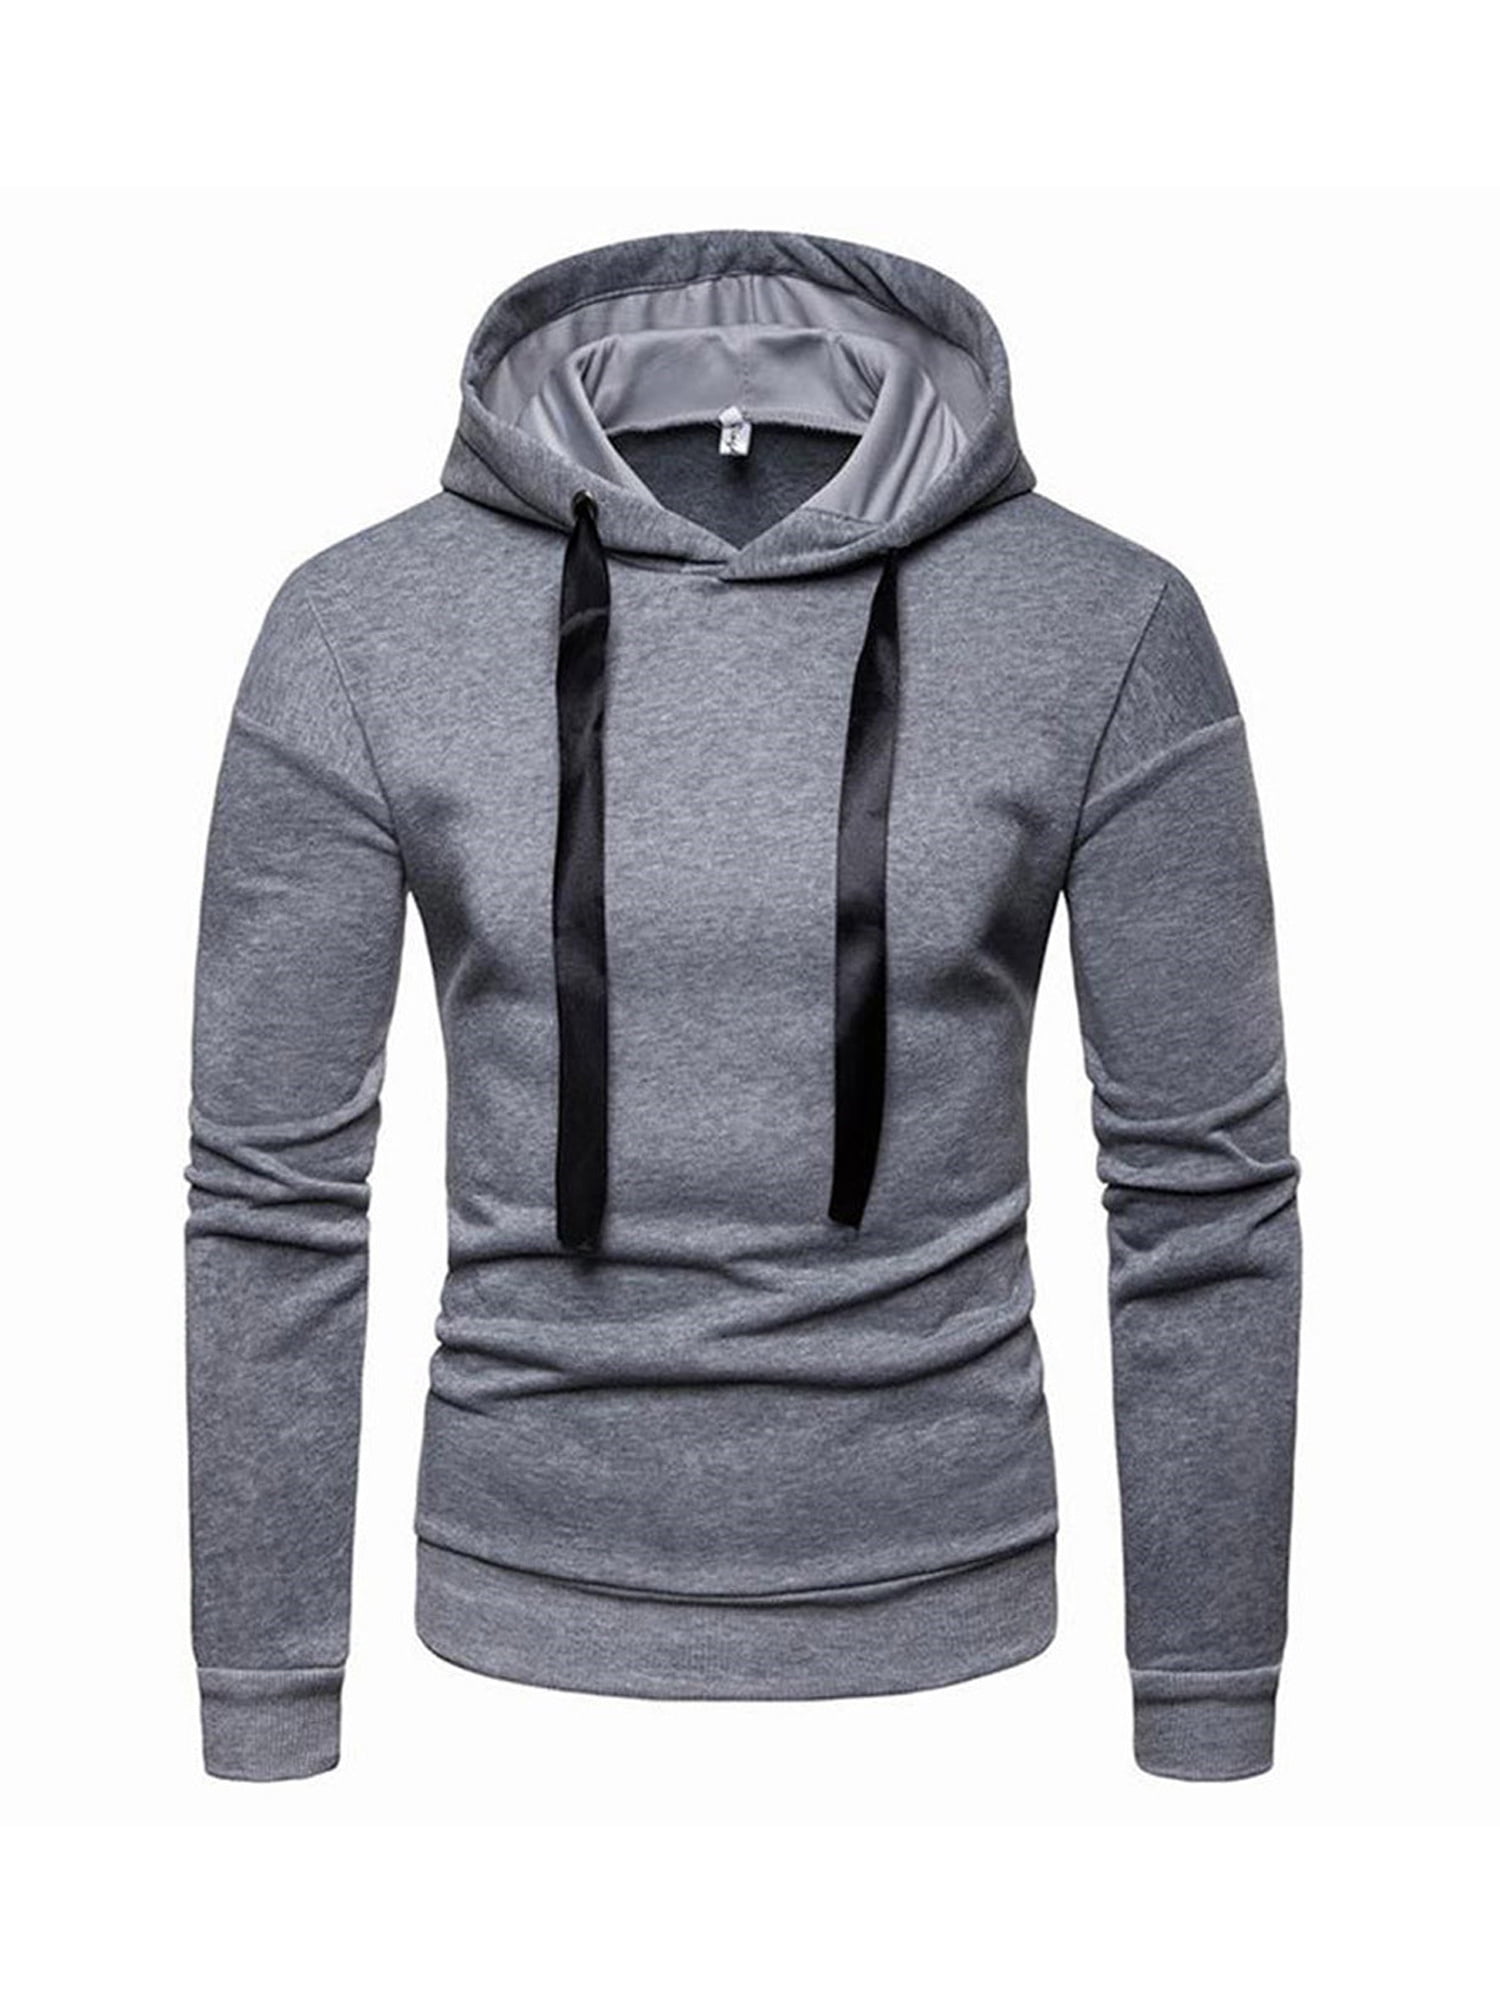 Men's Long Sleeve Pullover Hooded Warm Fleece Cotton Sports Hoodie Sweatshirt 